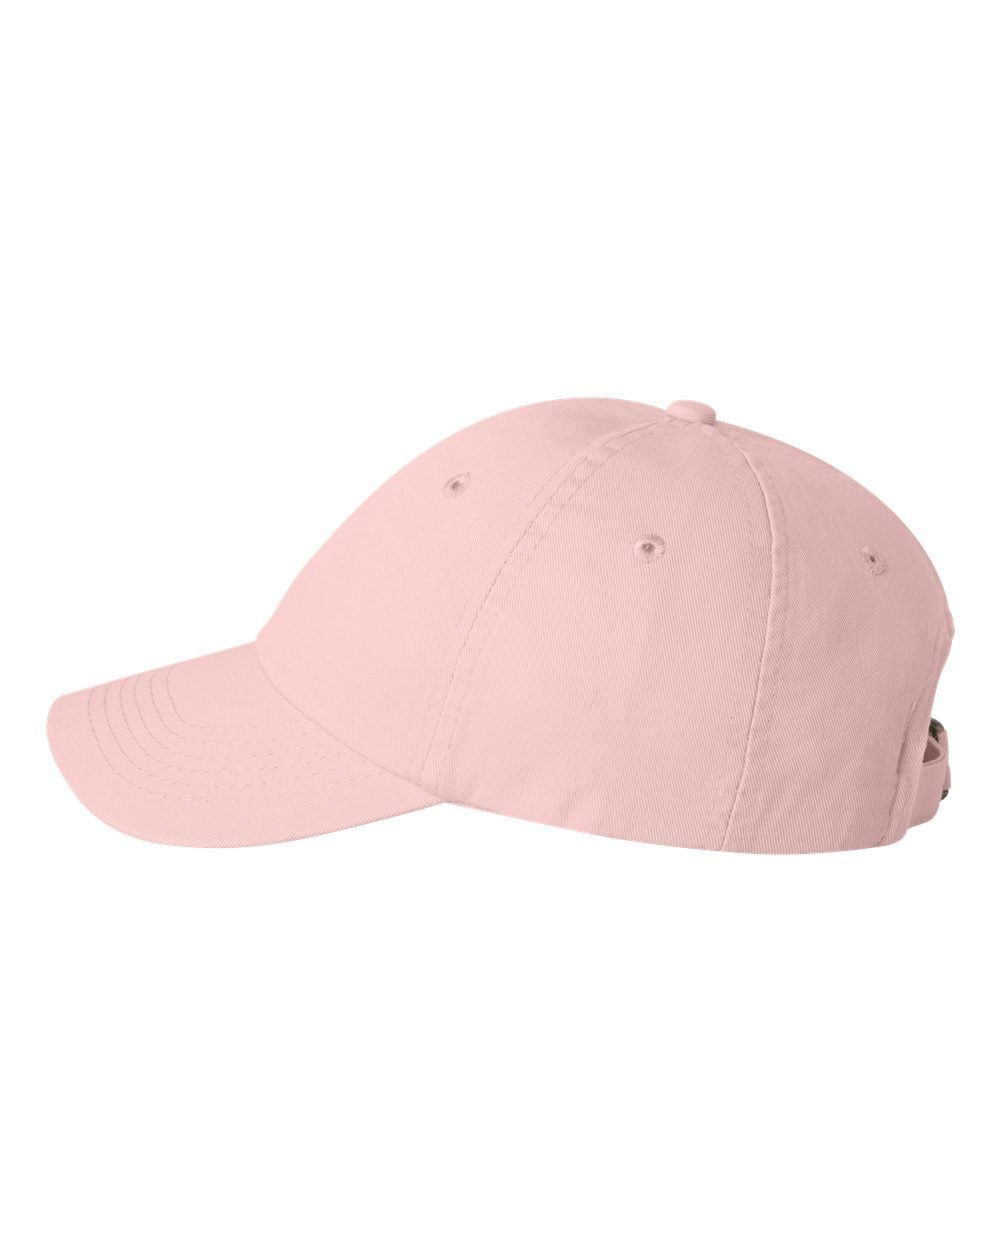 Youth Unisex Cap, Light Pink